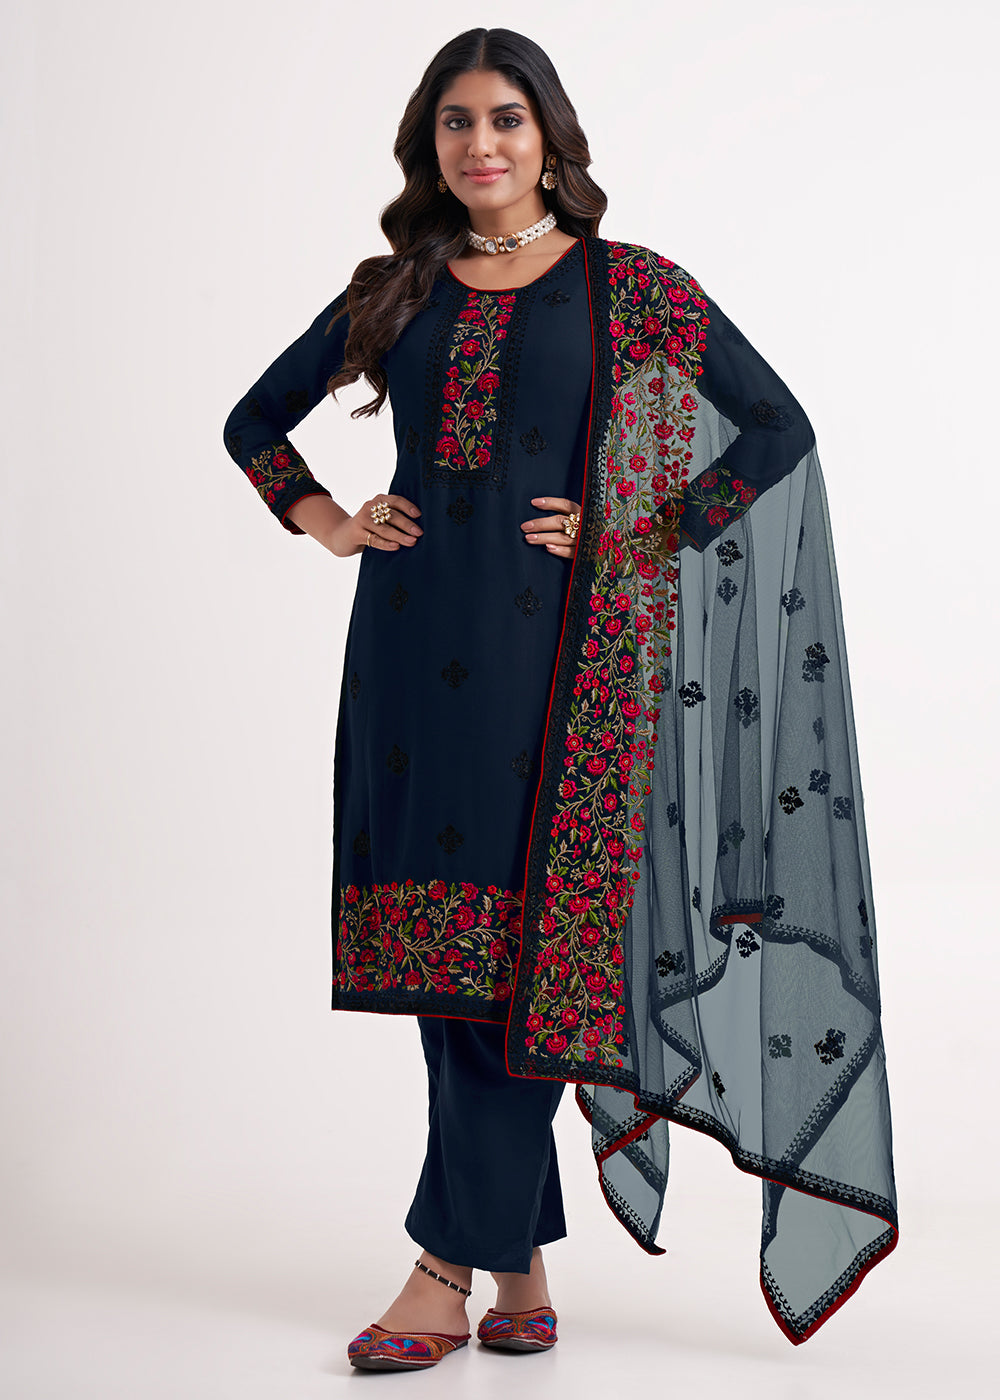 Buy Now Fancy Beauteous Navy Blue Eid Festive Salwar Suit Online in USA, UK, Canada, Germany, Australia & Worldwide at Empress Clothing. 